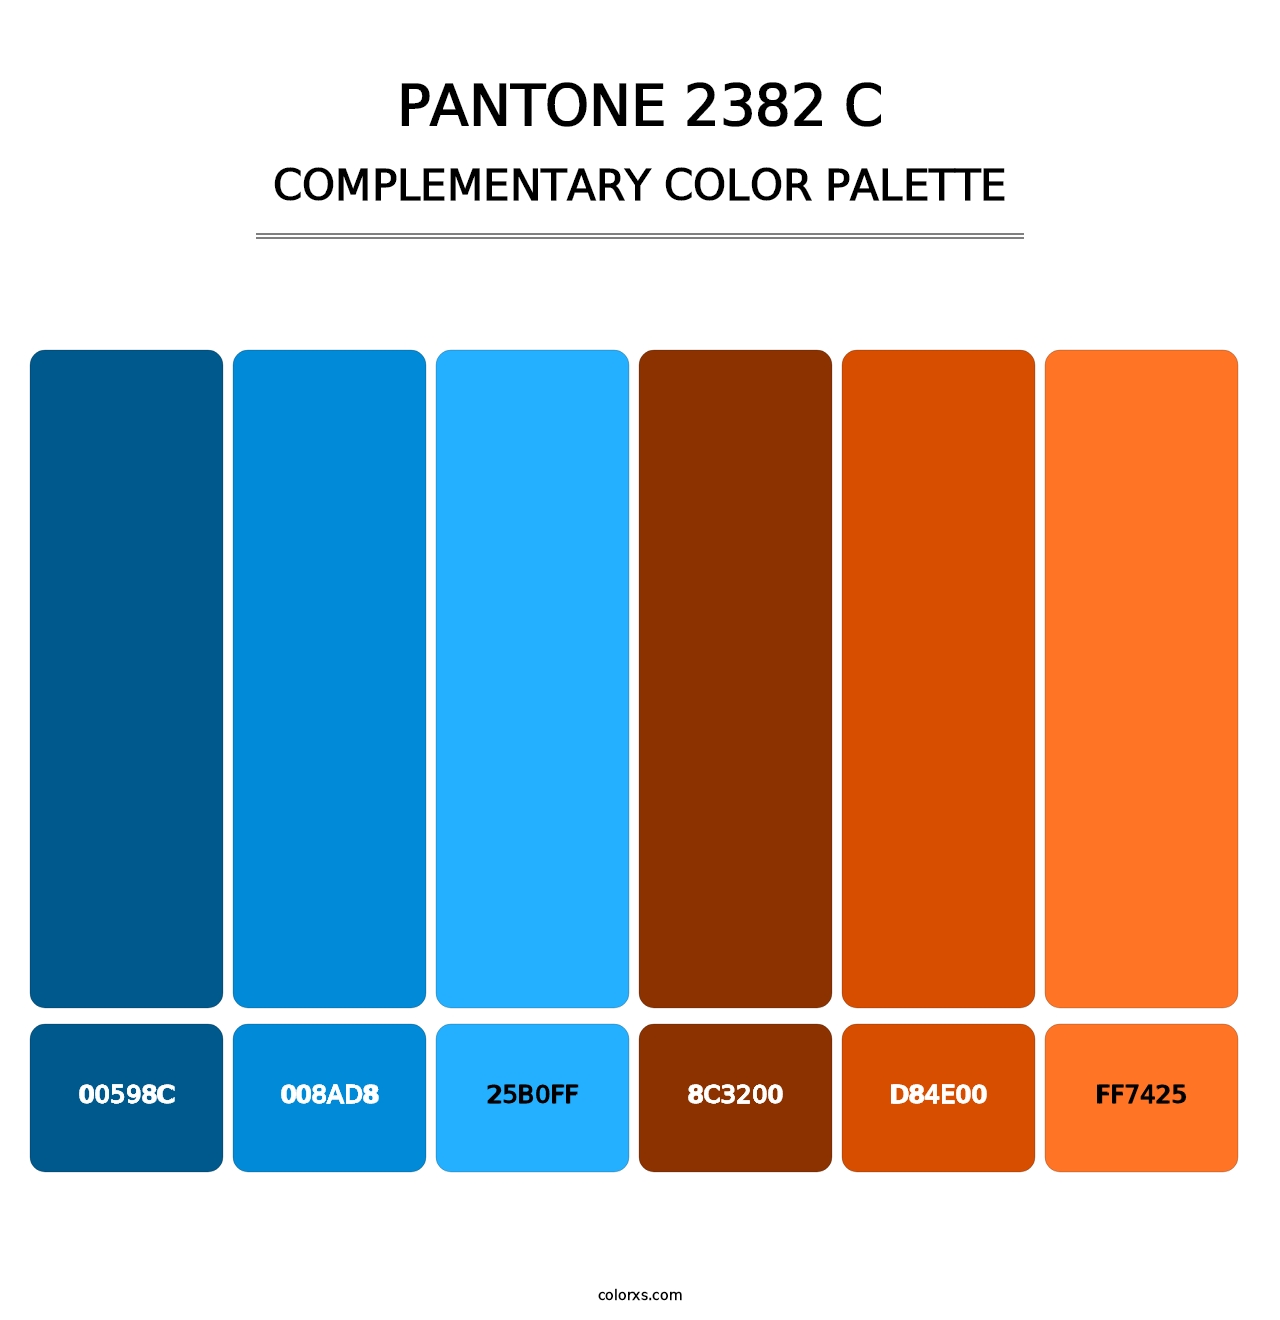 PANTONE 2382 C - Complementary Color Palette